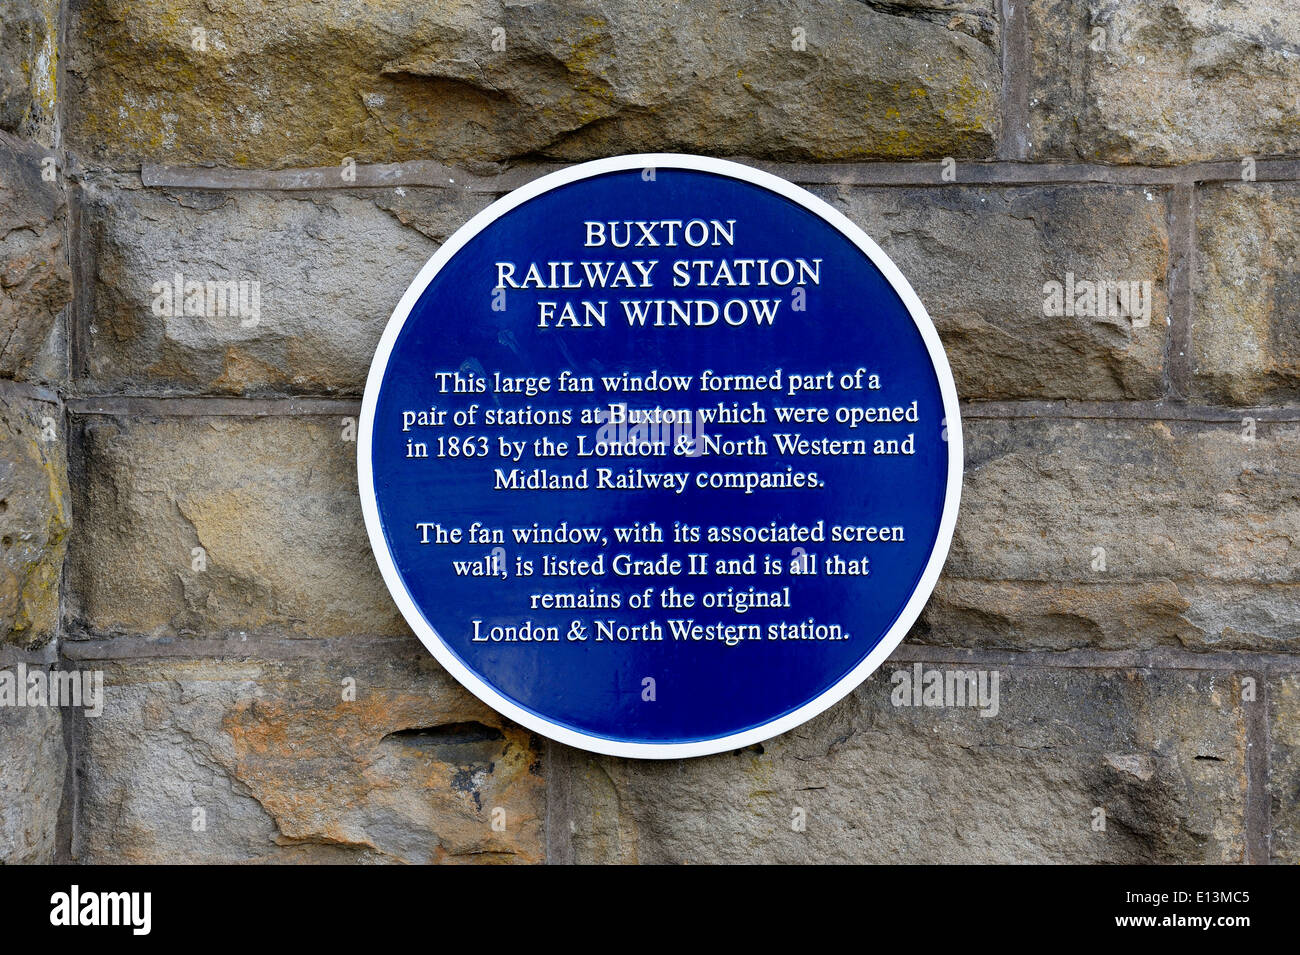 Buxton railway station fan window sign Derbyshire England UK Stock Photo